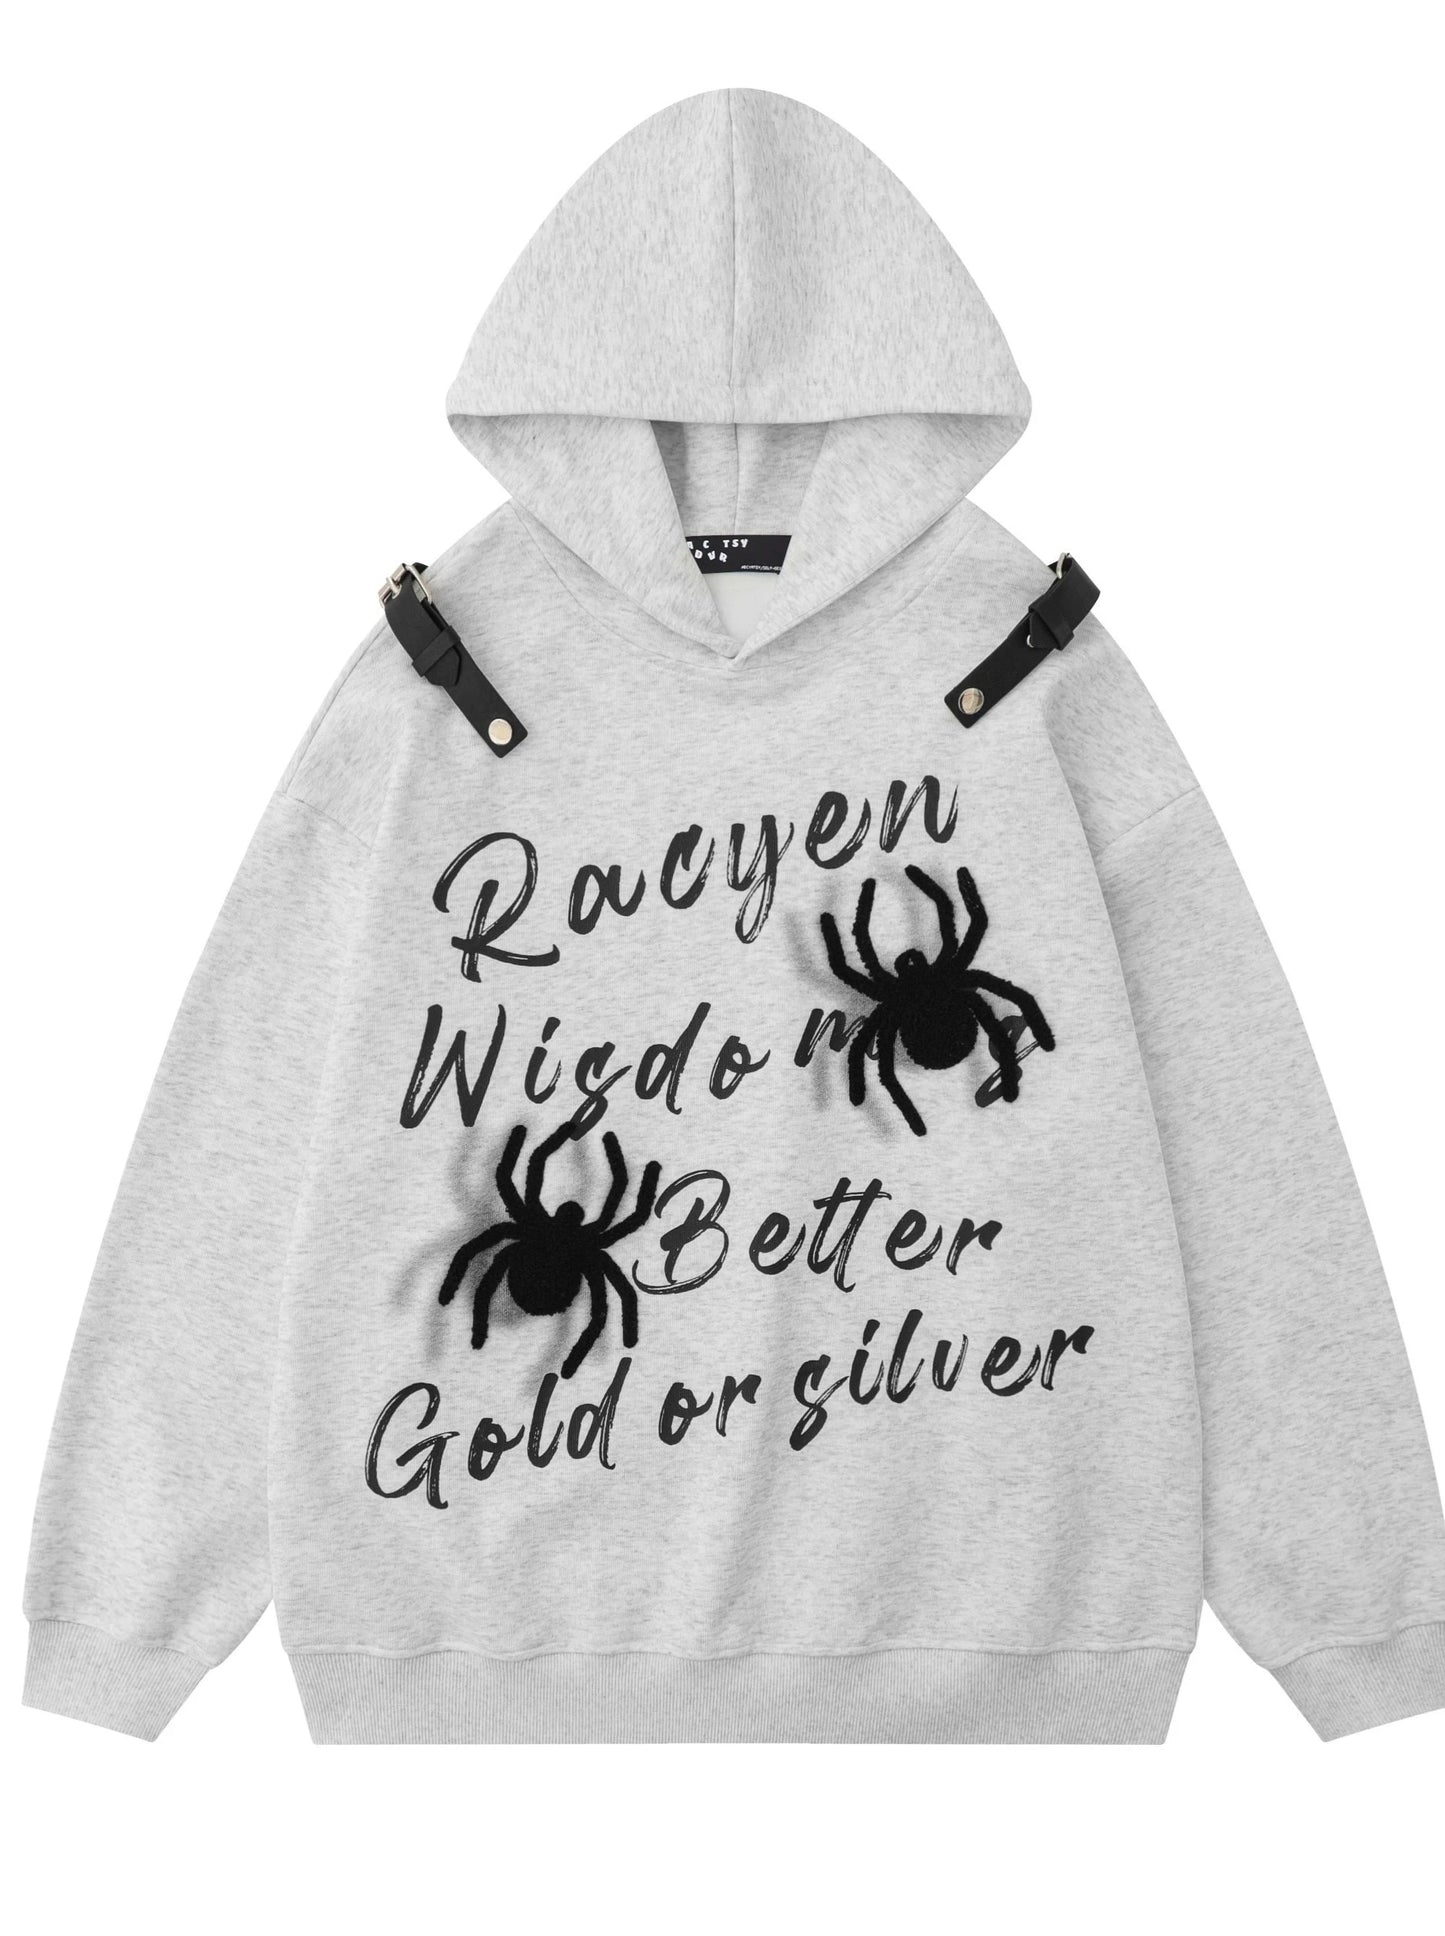 Next-generation/original spider letter print dark student versatile hooded long-sleeved sweatshirt